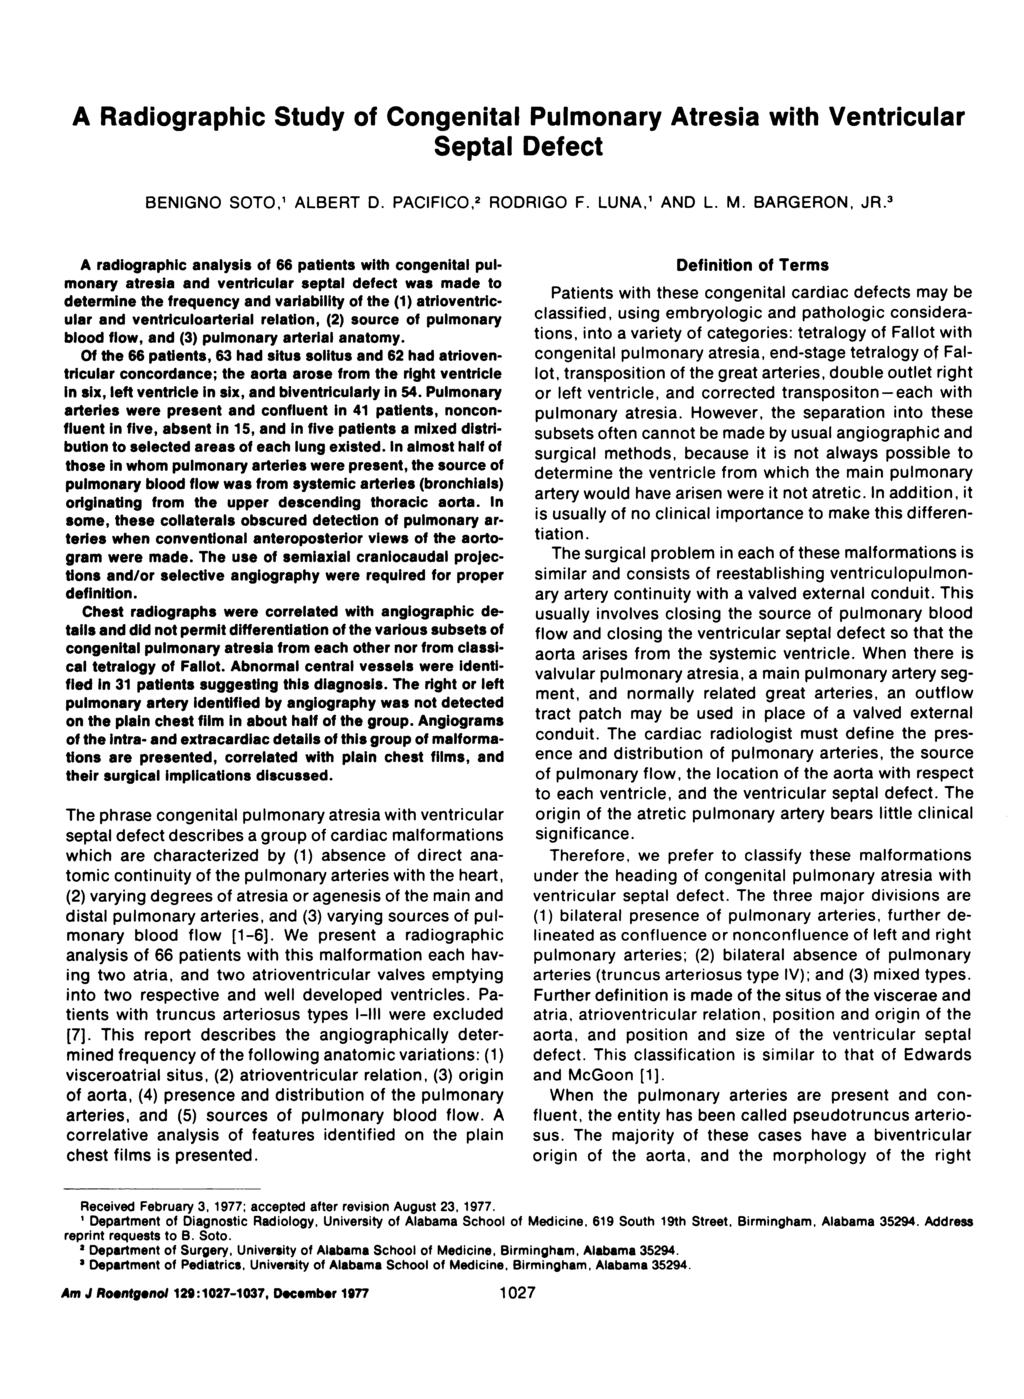 A Radiographic Study of Congenital Pulmonary Atresia with Ventricular Septal Defect BENIGNO SOTO,1 ALBERT D. PACIFICO,2 RODRIGO F. LUNA,1 AND L. M. BARGERON, JR.